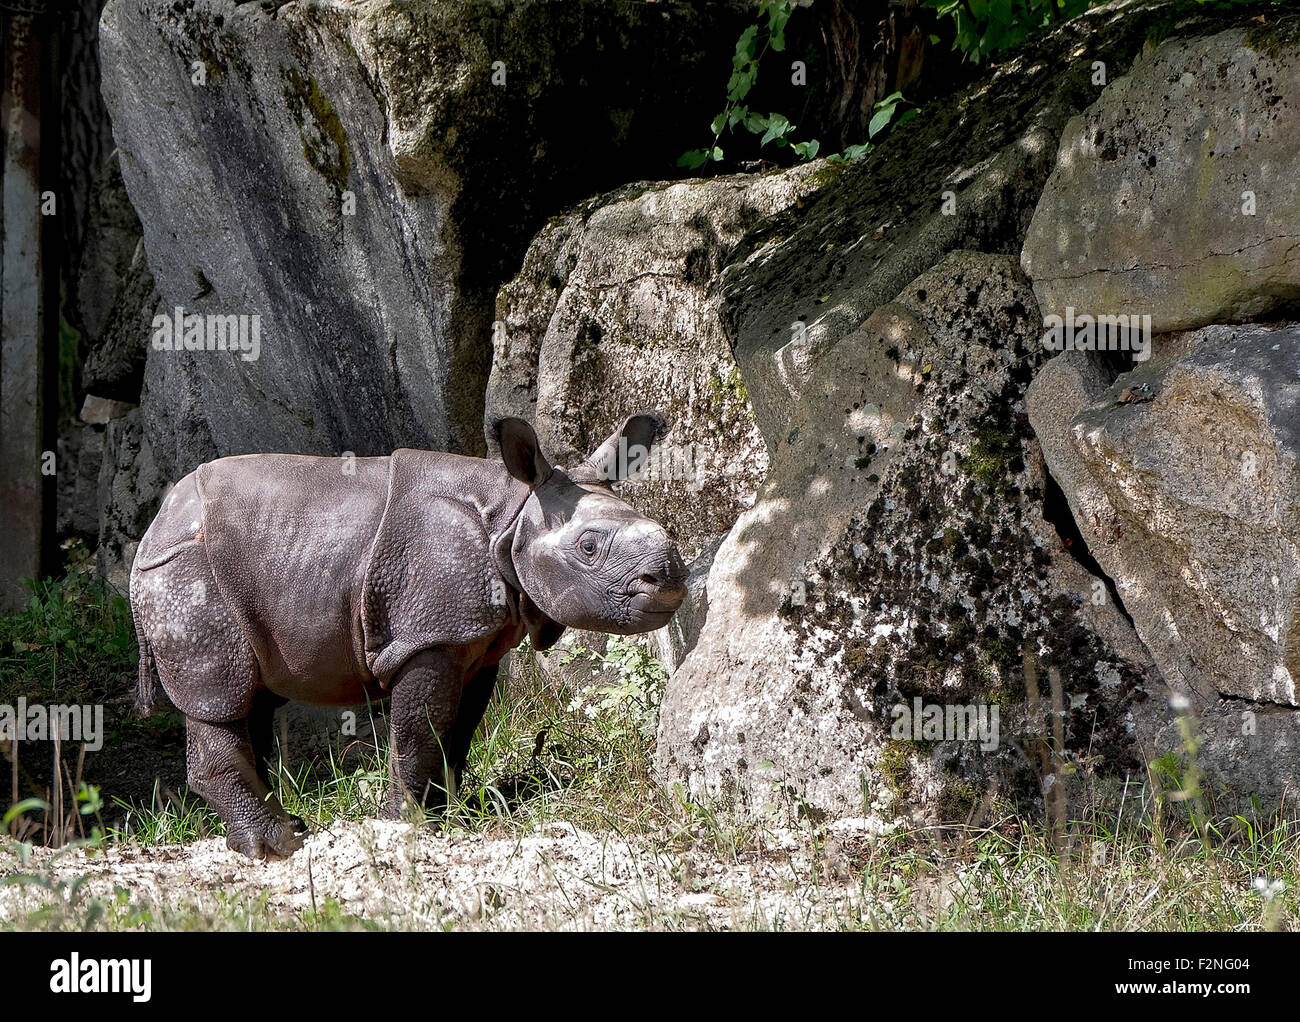 Le Rhinocéros indien (Rhinoceros unicornis) neuf jour old bull, zoo Hellabrunn, Munich, Bavière, Allemagne Banque D'Images